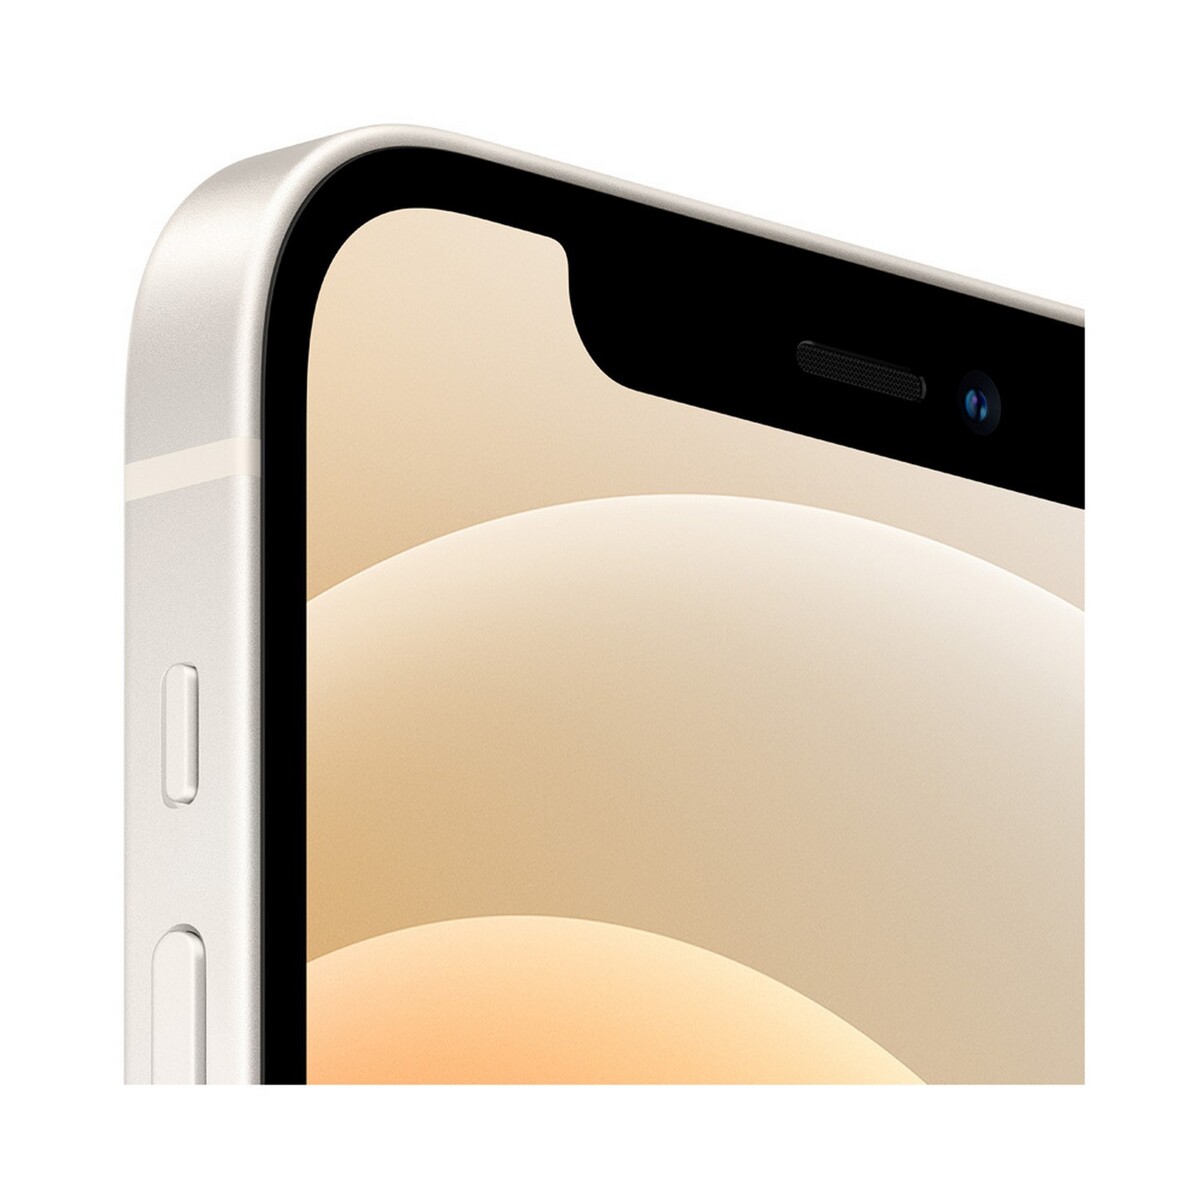 Apple iPhone 12 Mini 64GB White